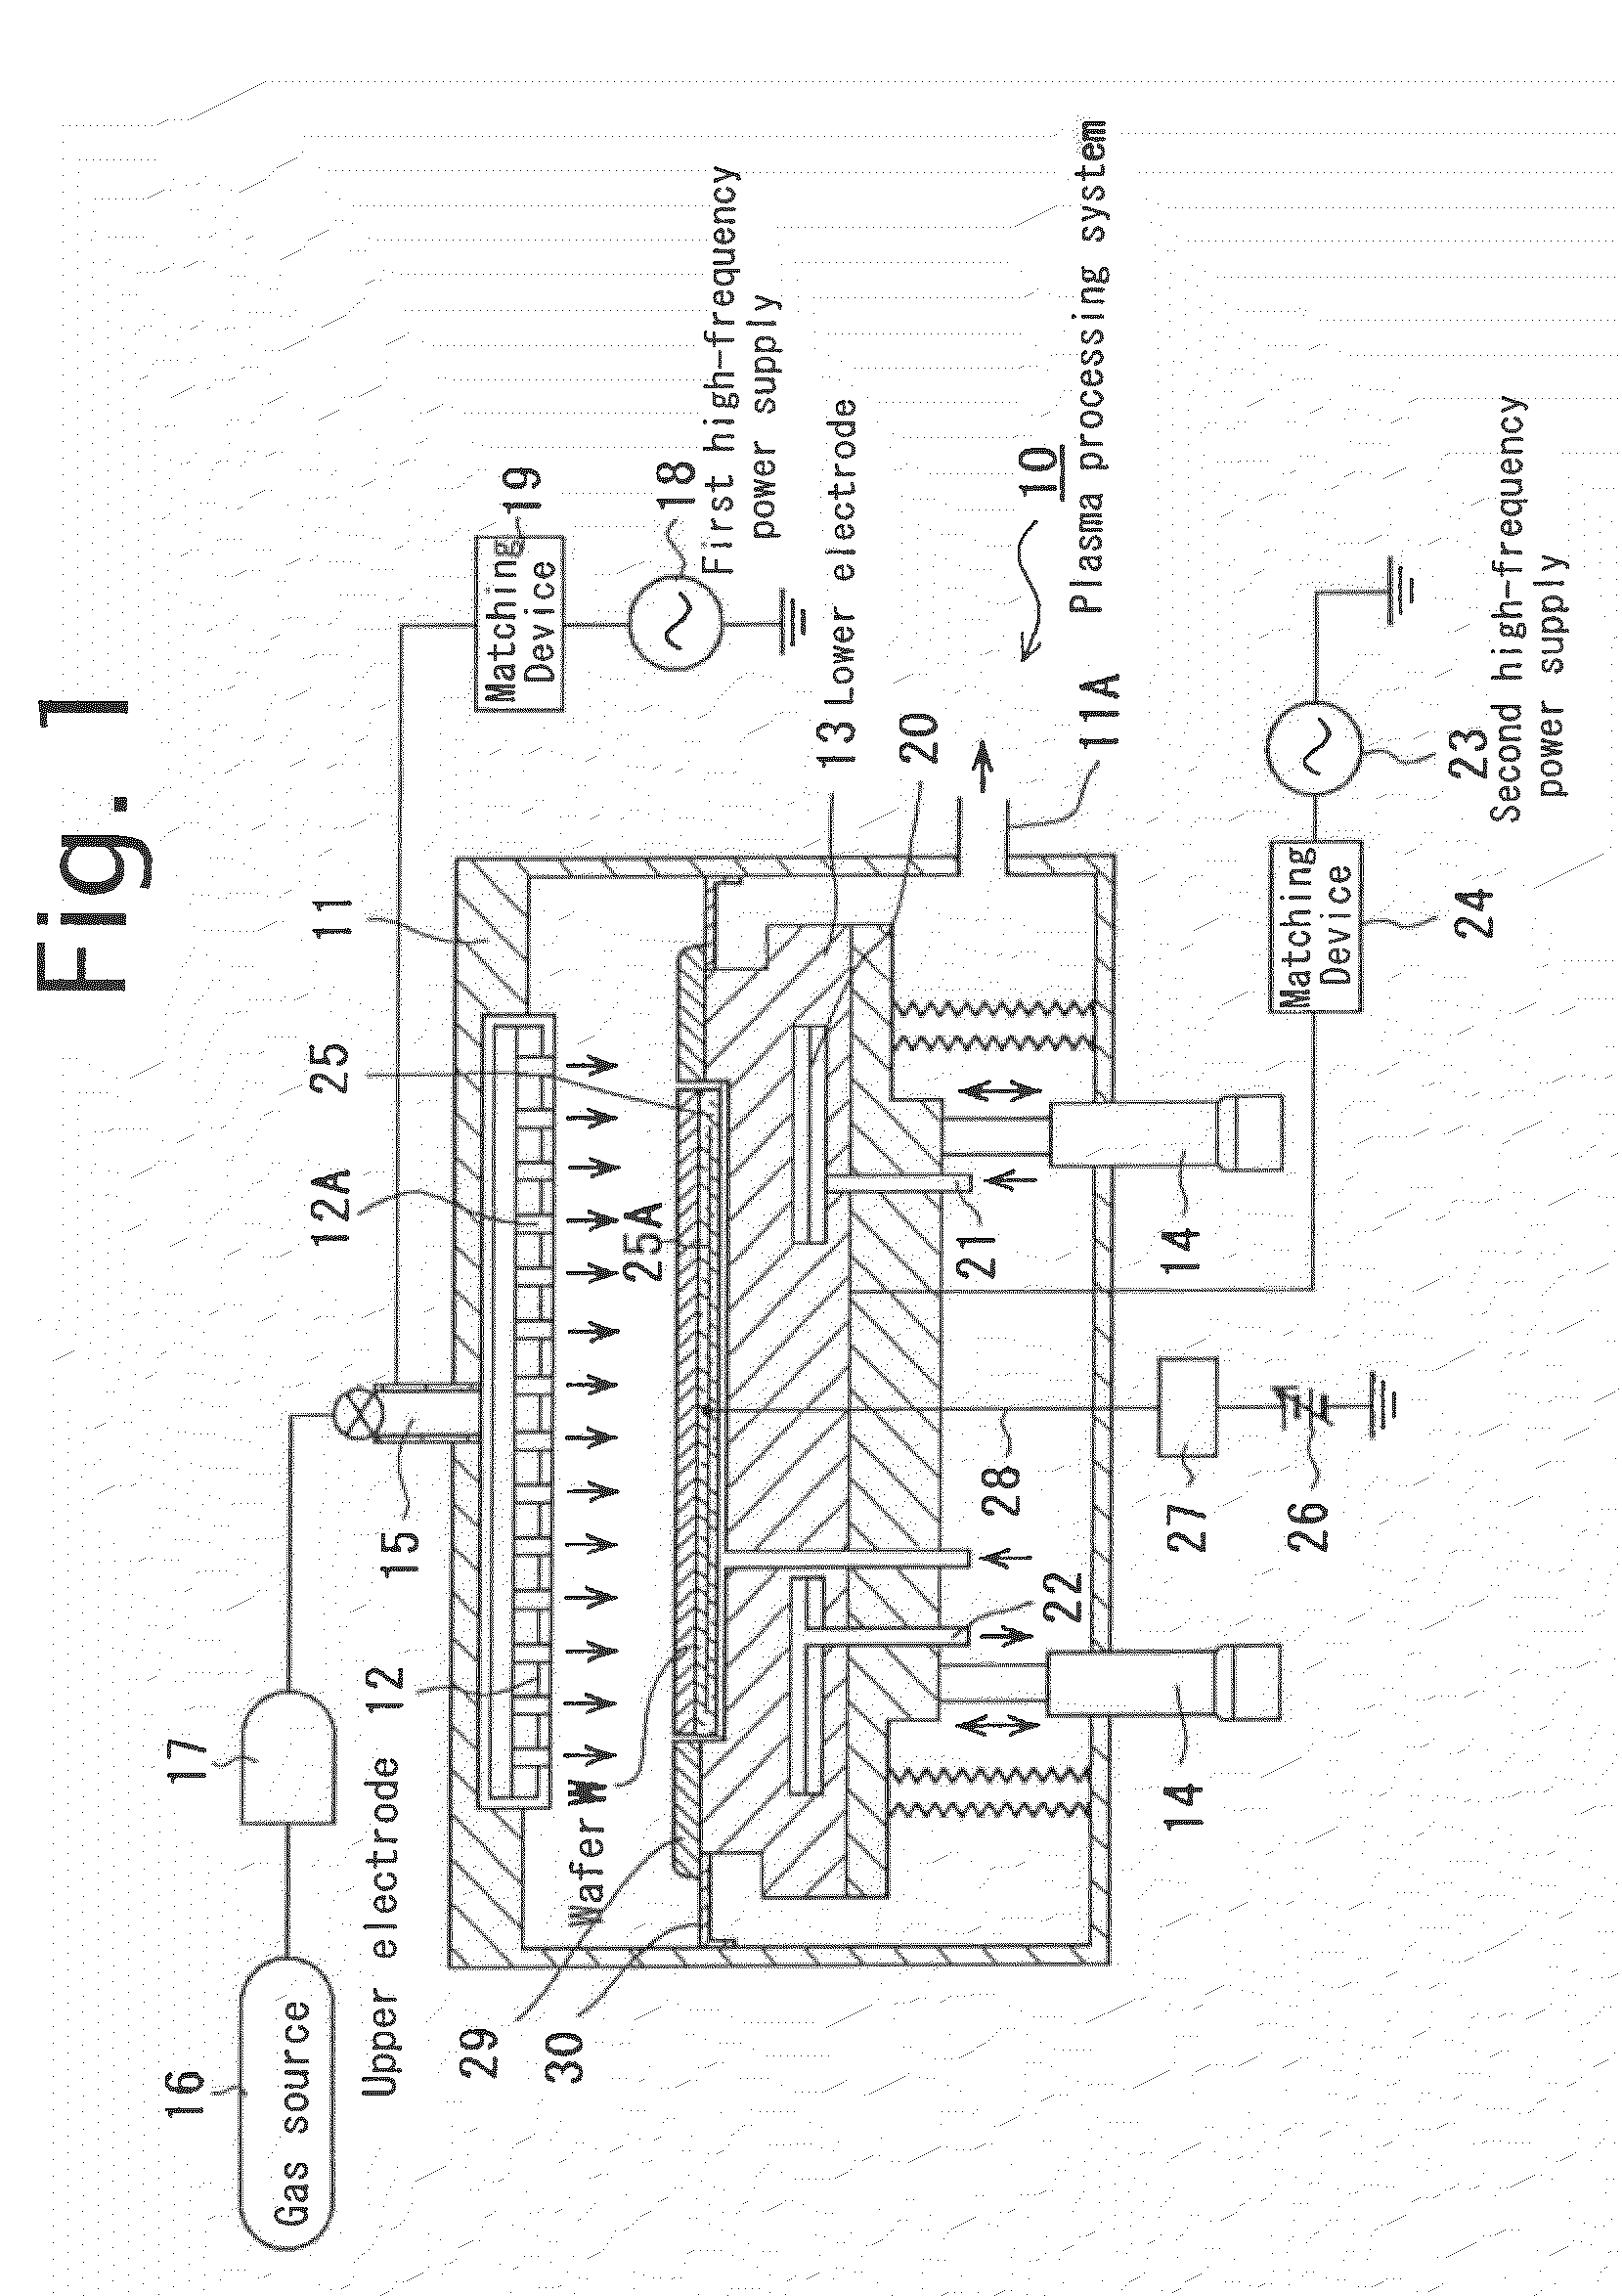 Apparatus and method for plasma processing